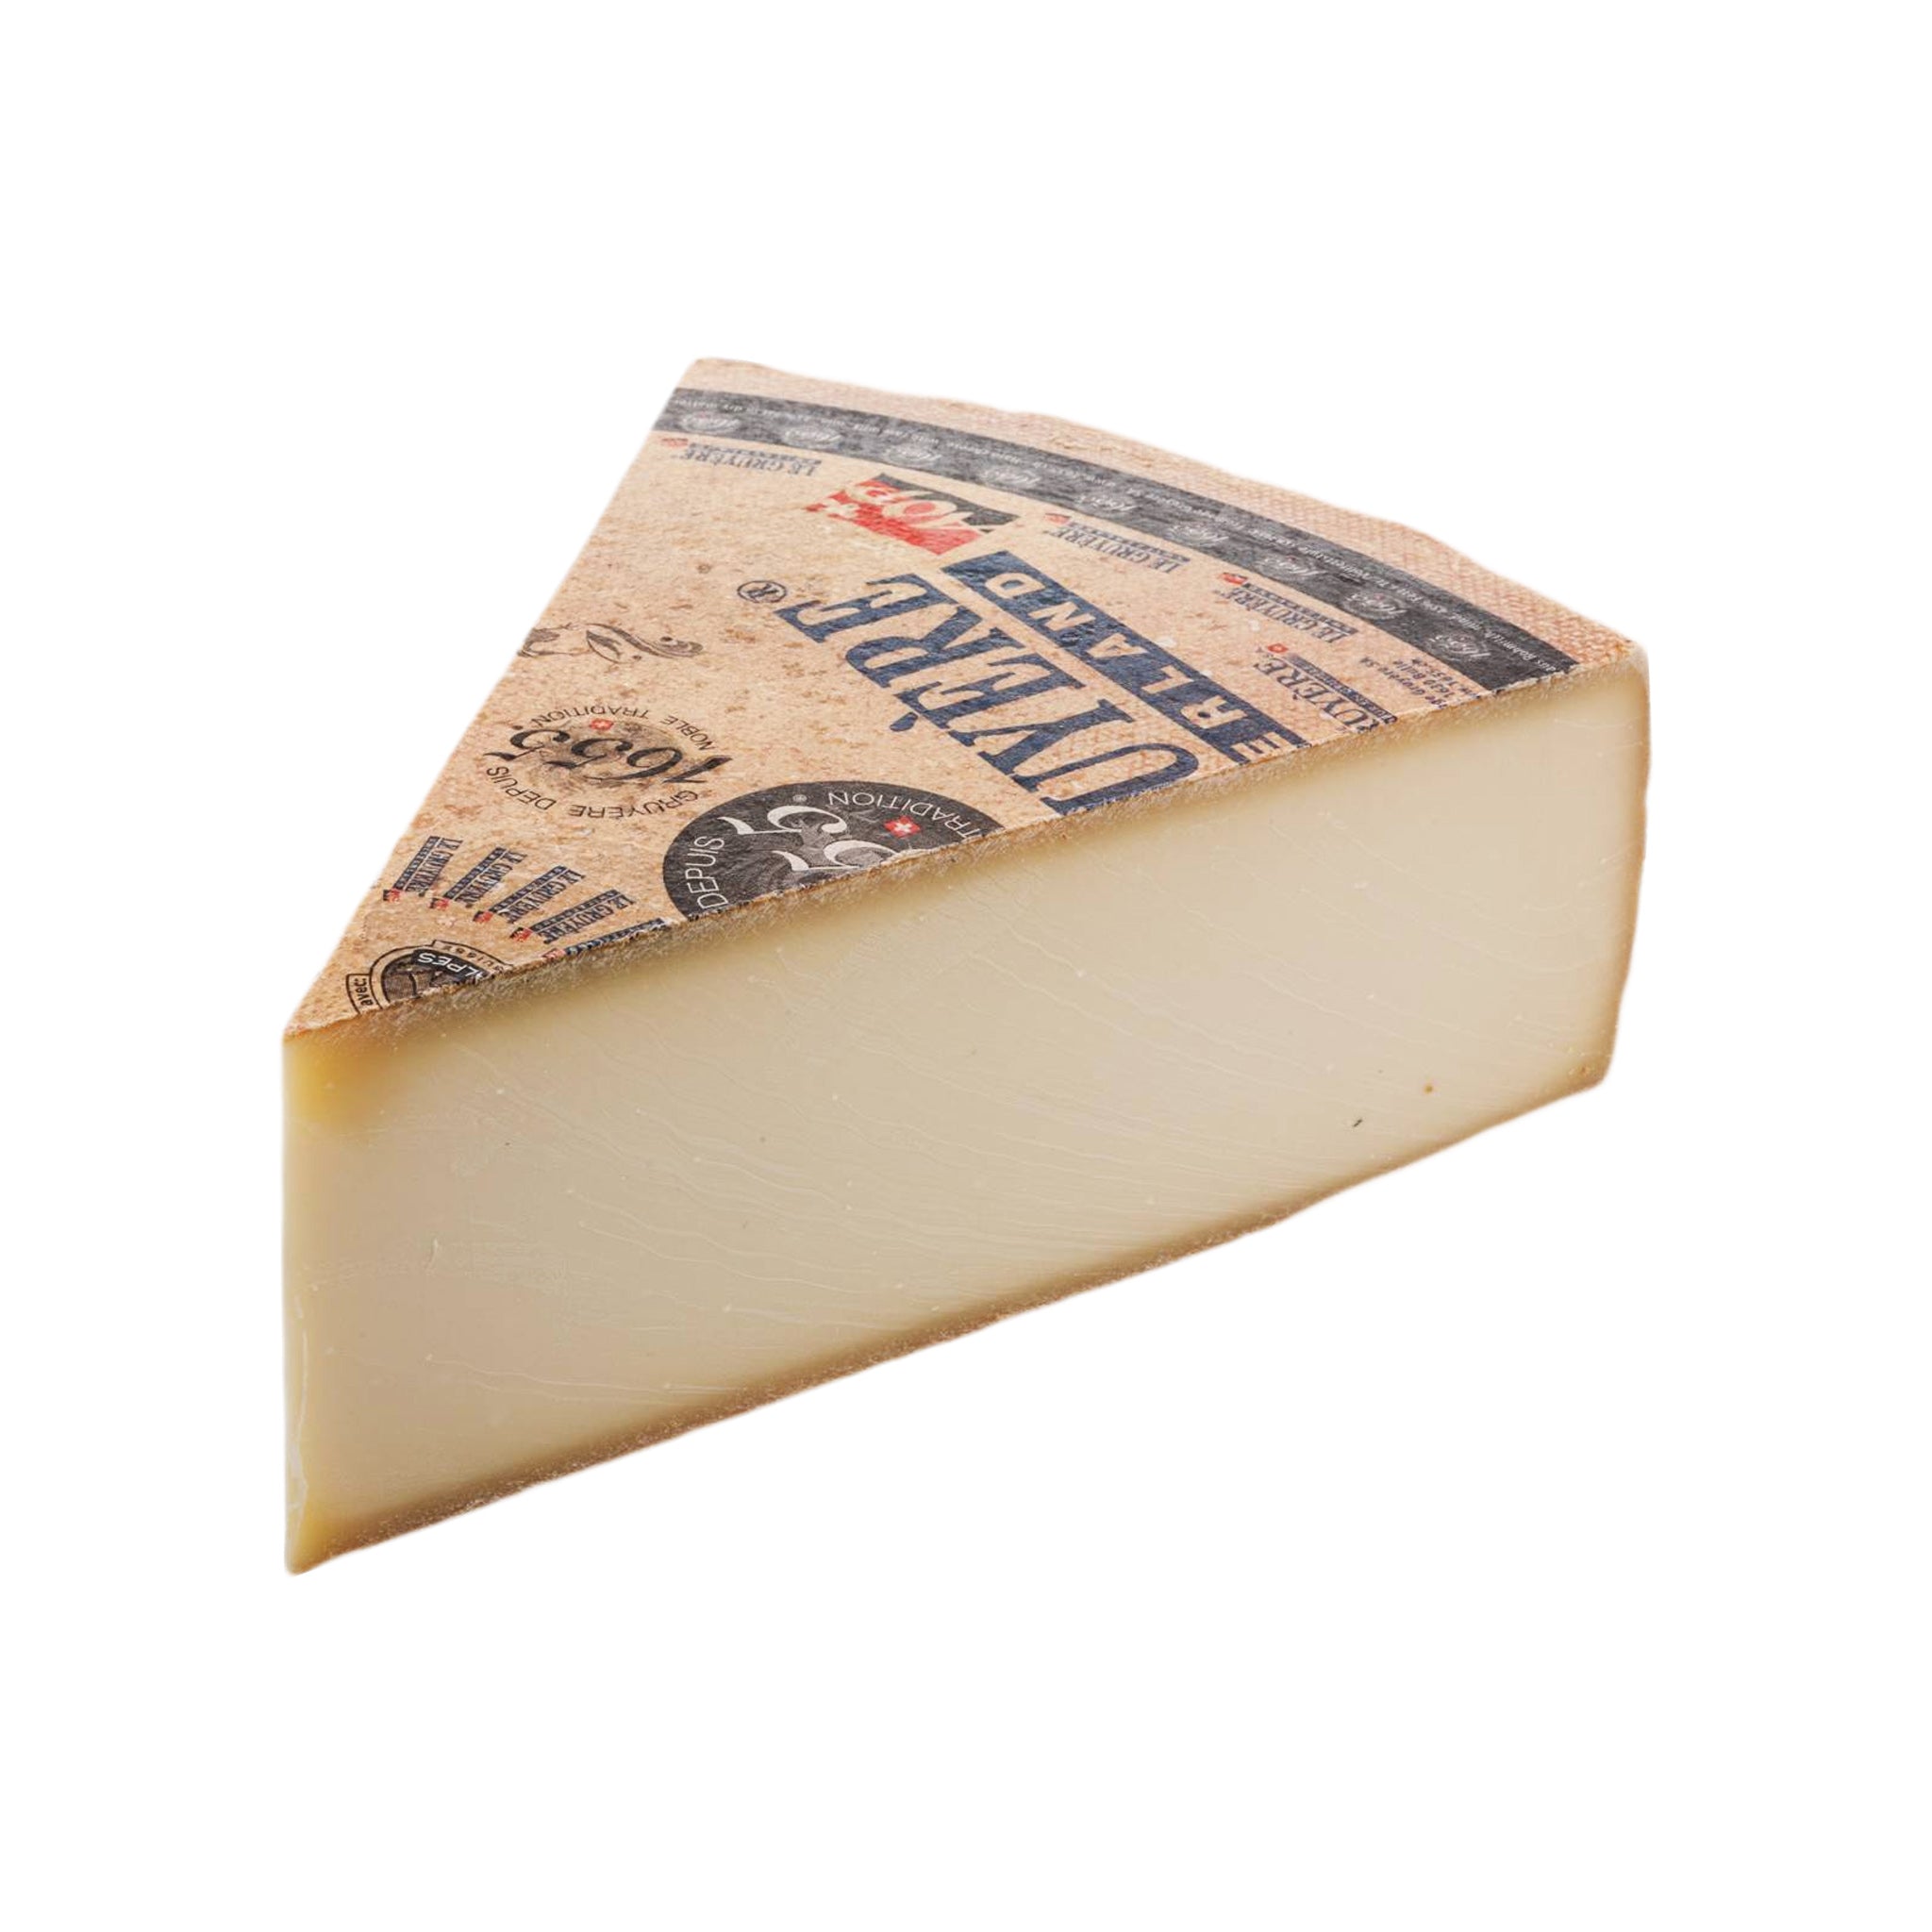 Raw Cows Milk Gruyere Cheese